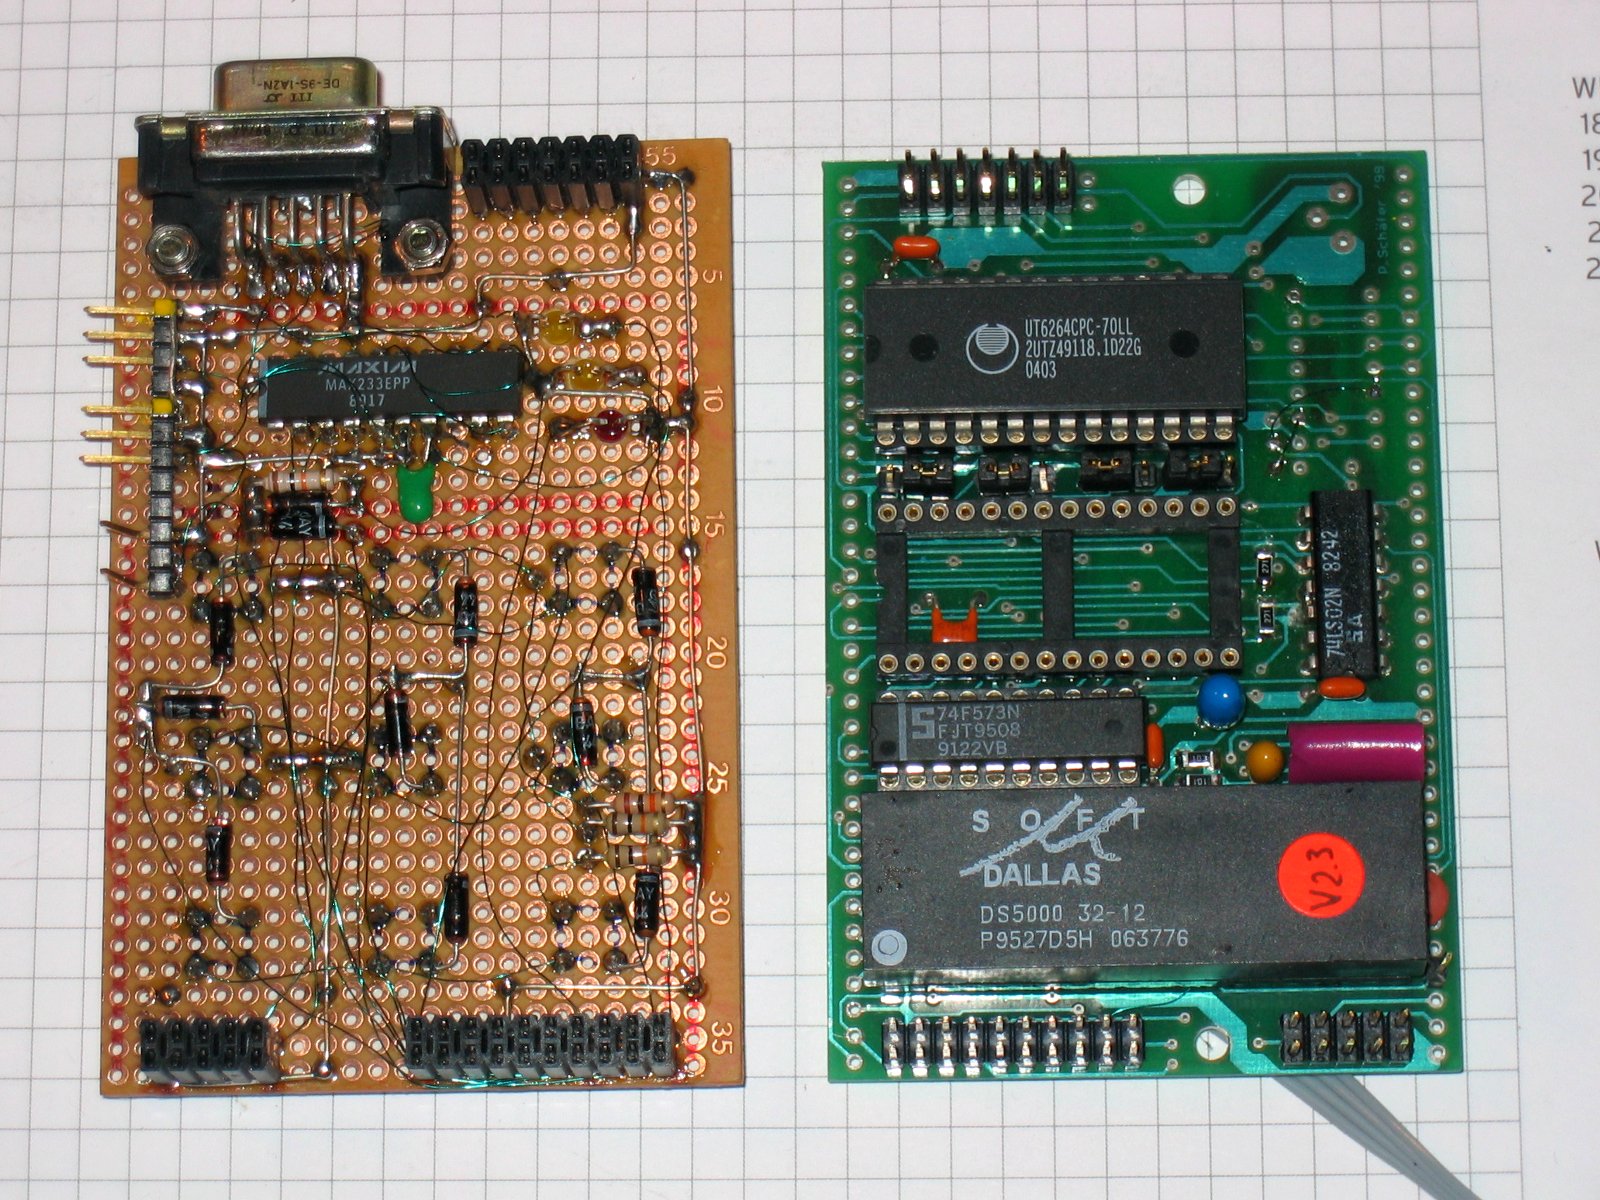 controller and proto board